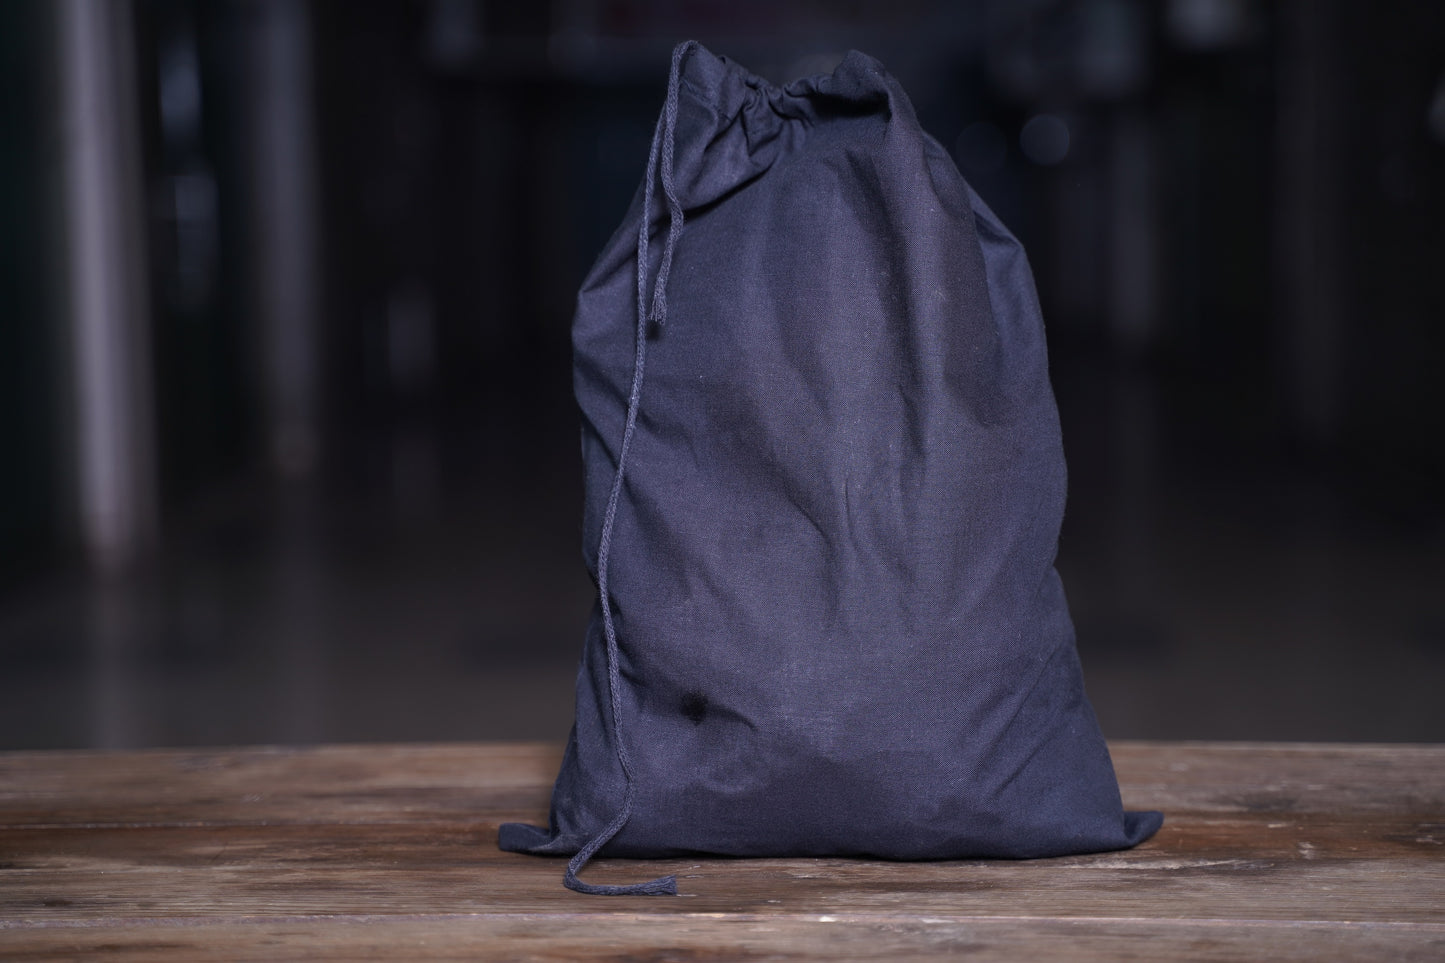 12x16 Inches Reusable Eco-Friendly Cotton Single Drawstring Bags Black Color